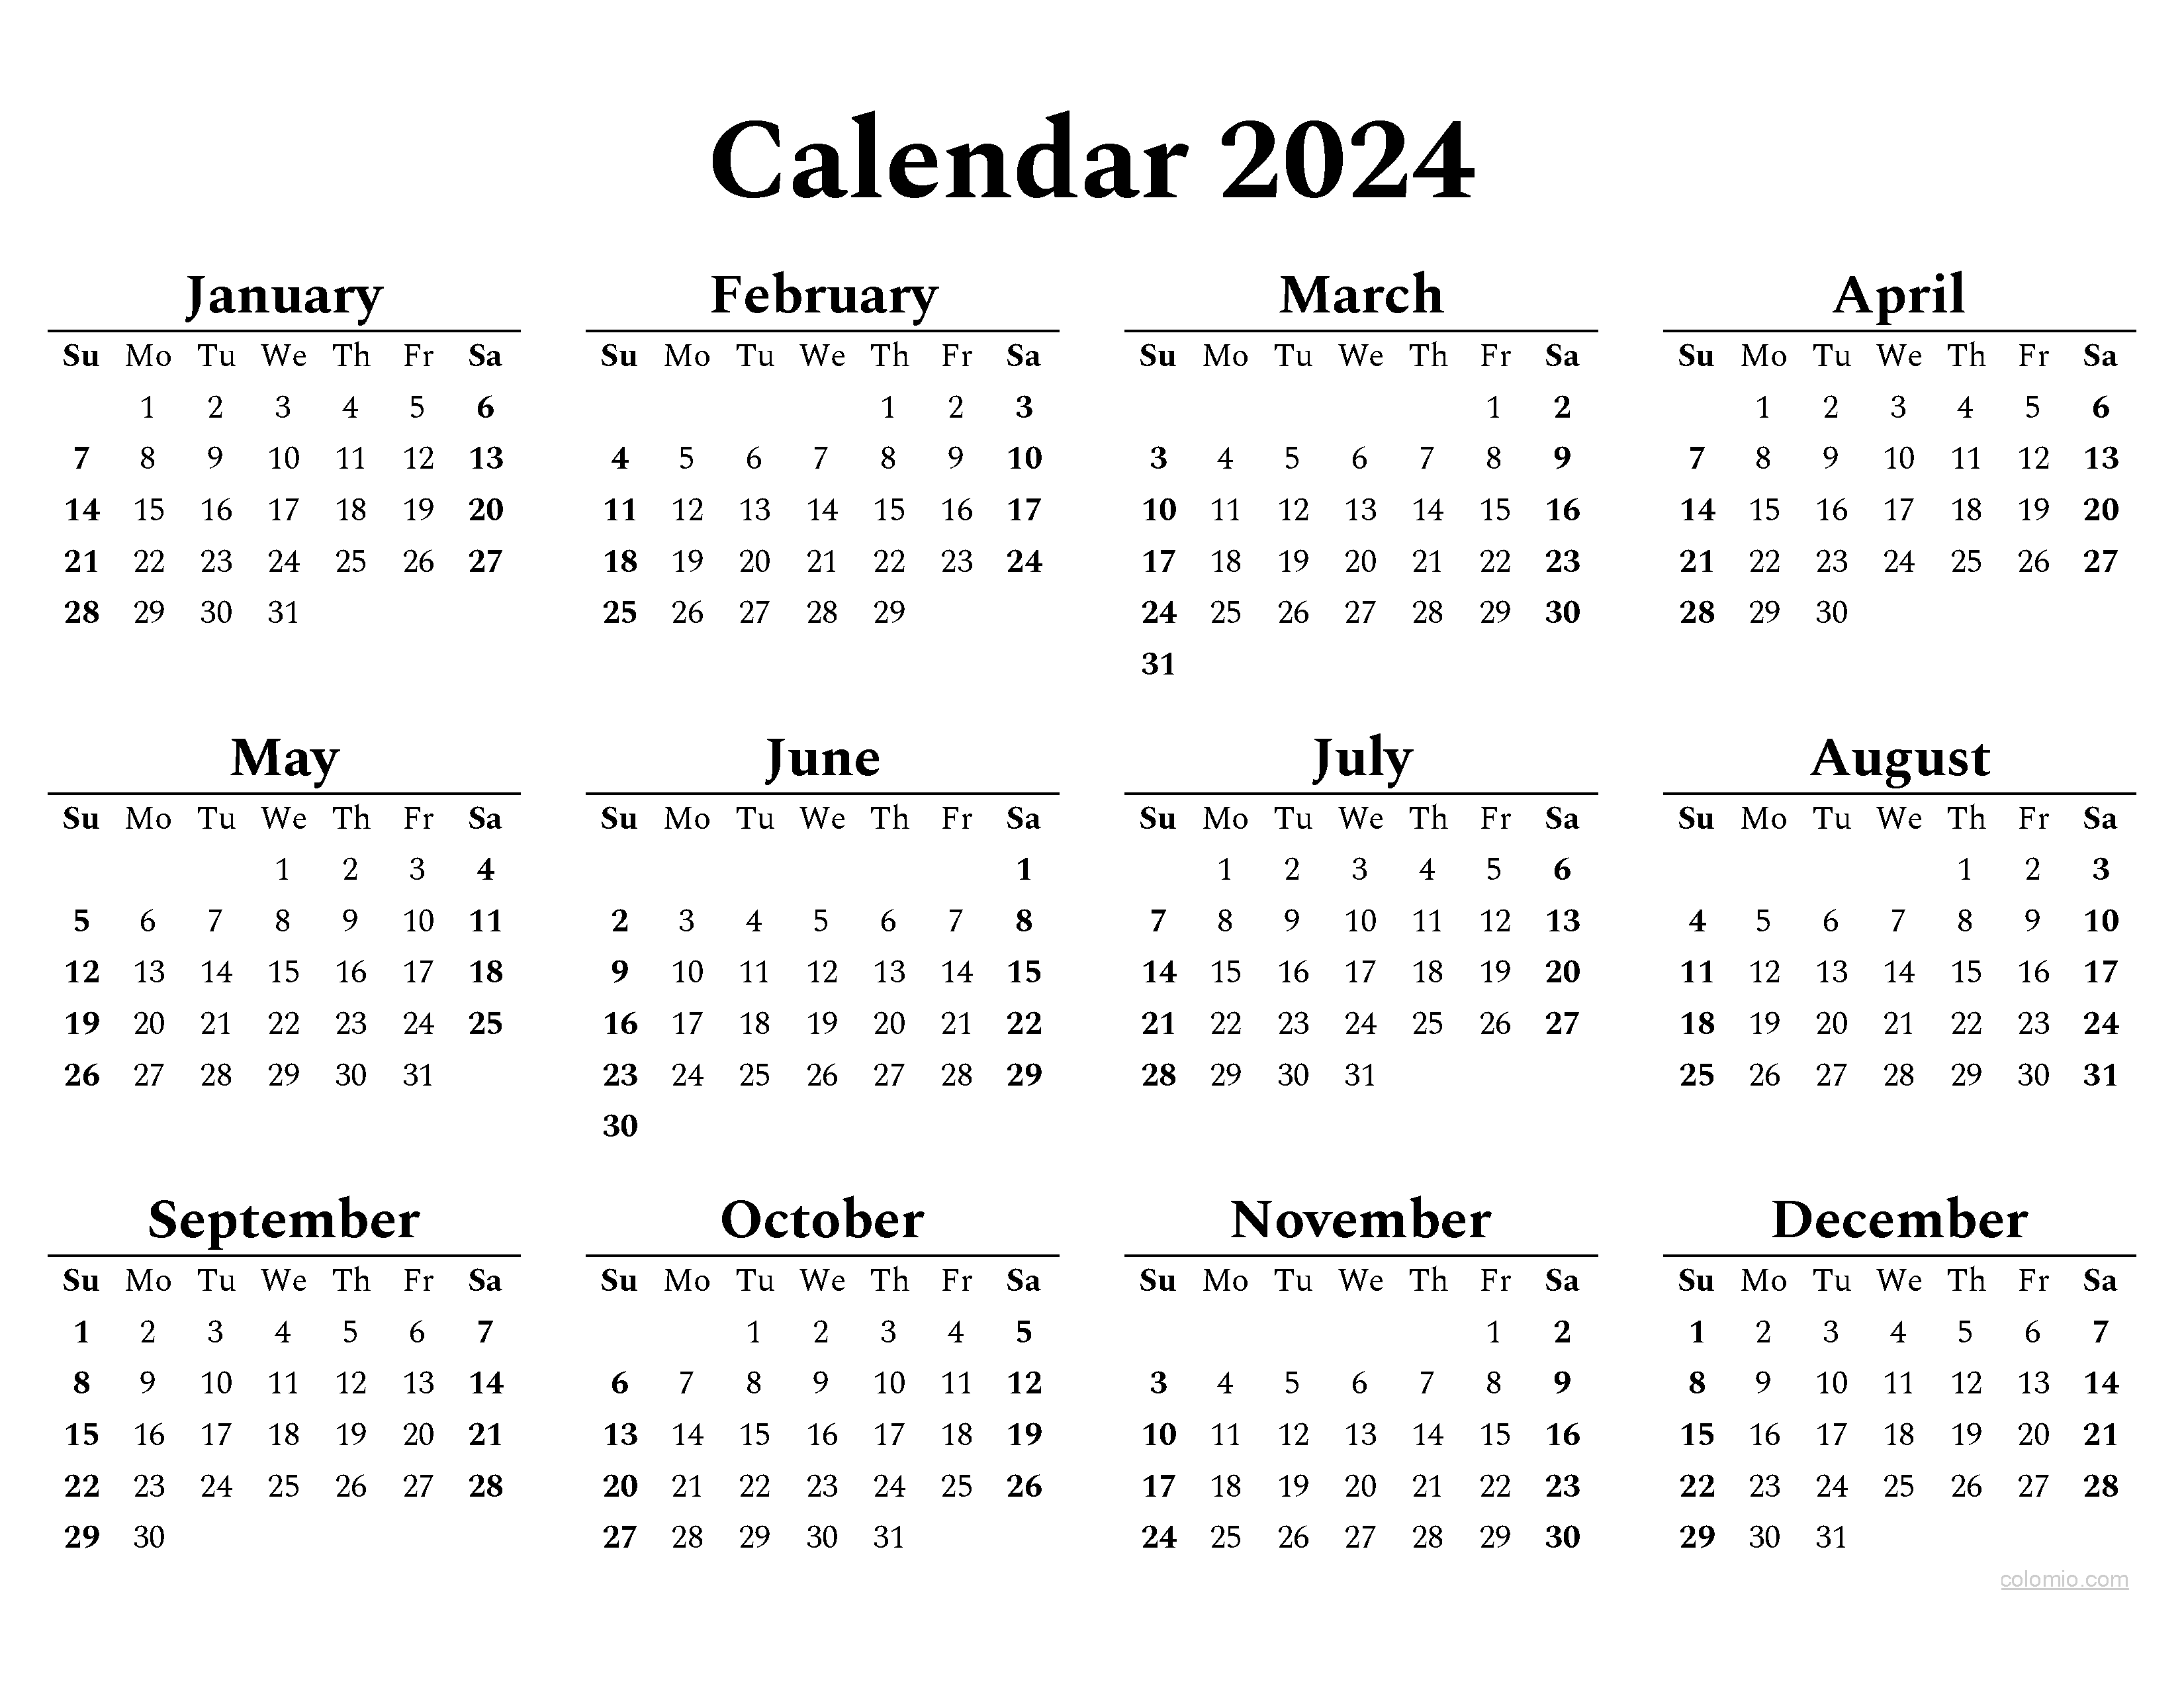 Calendar 2024 Template Pdf Fina Orelle - Free Printable 2024 Calendar Whole Year One Page